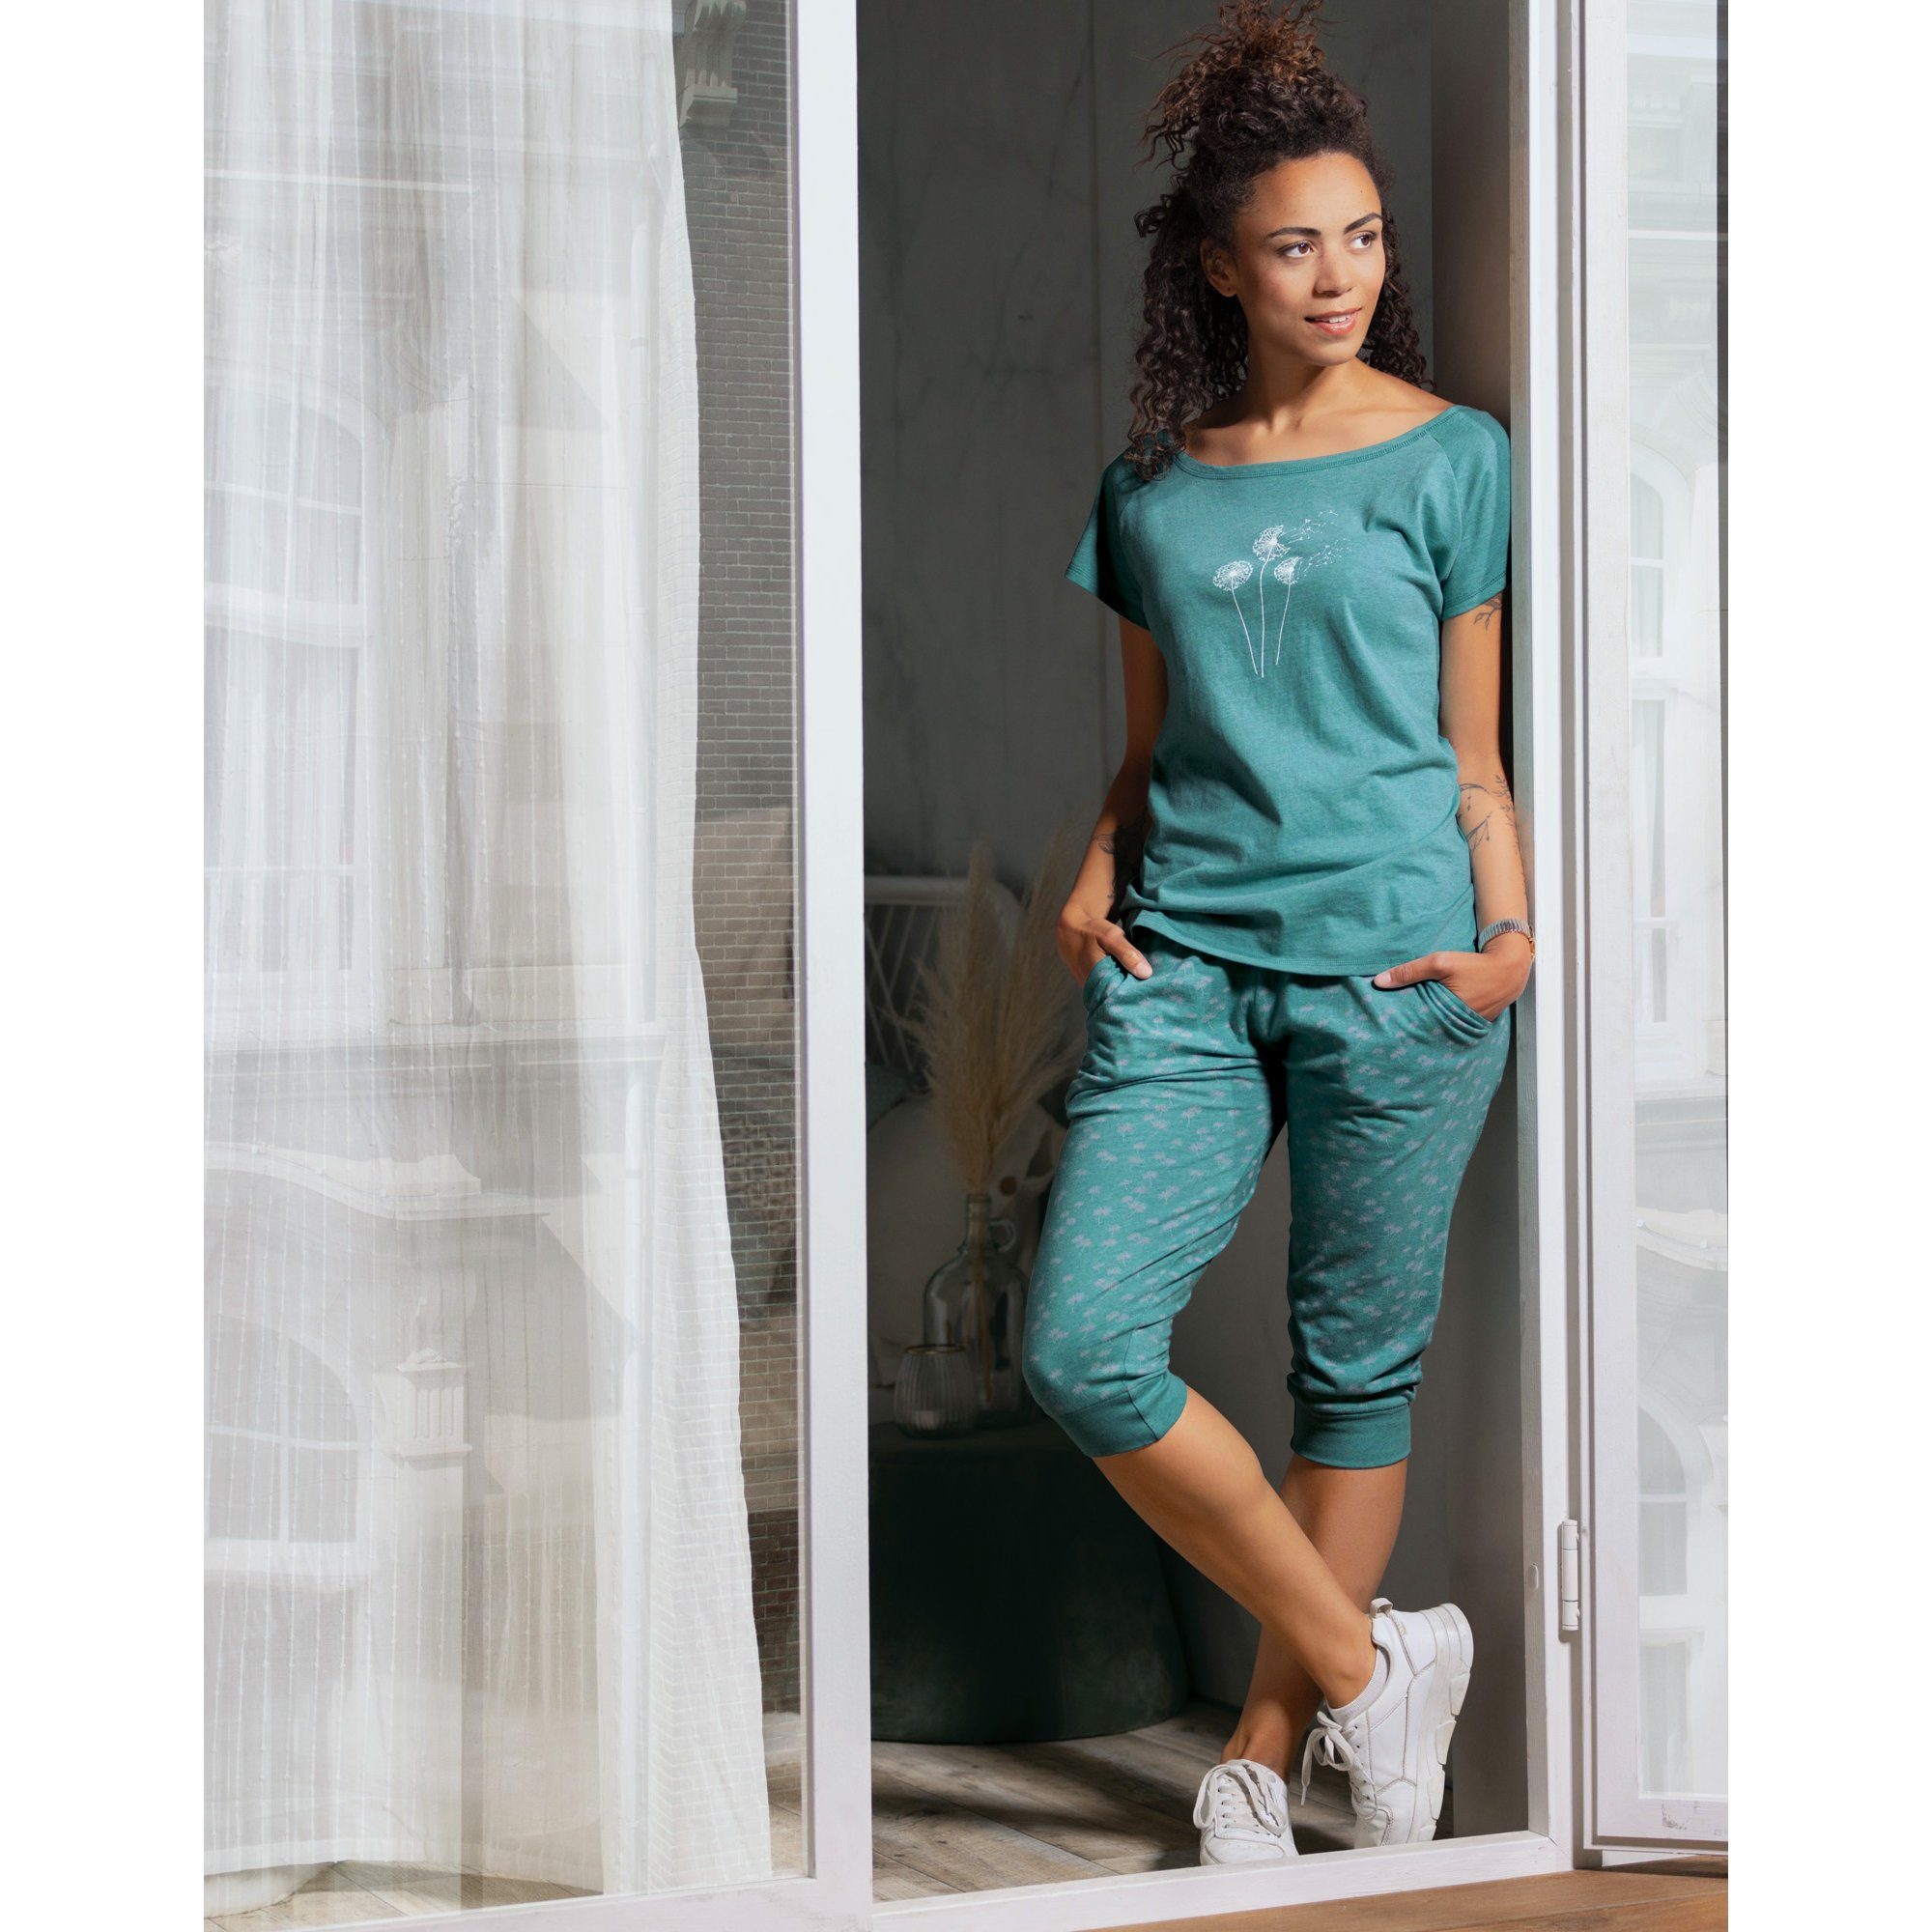 REDBEST Single-Jersey Damen-Schlafanzug Pyjama Blumen